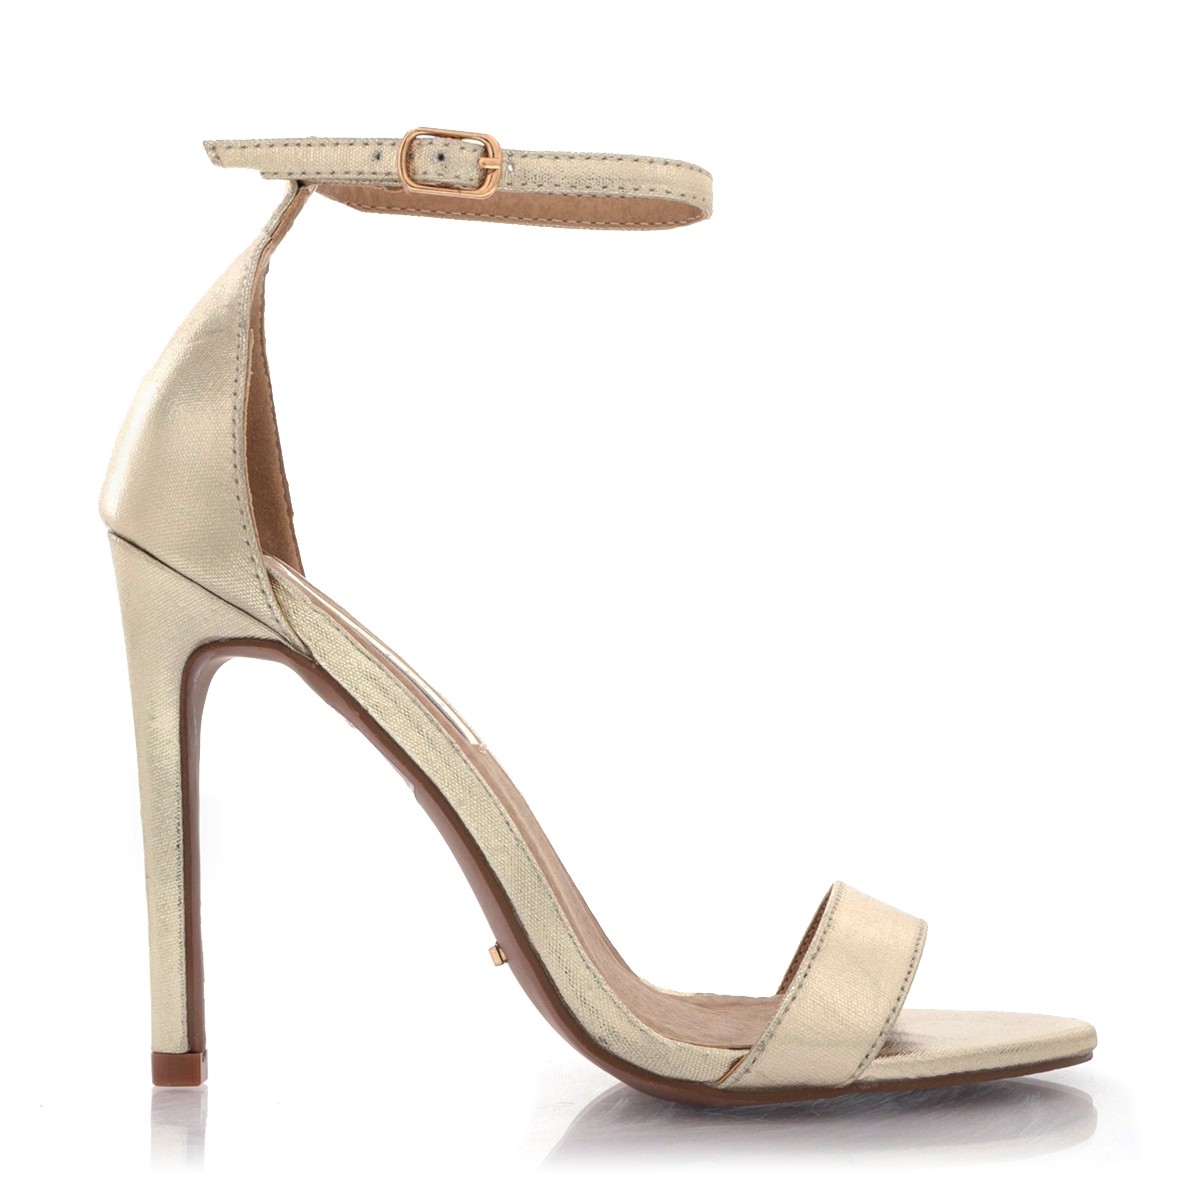 Heidi Light Gold Texture by Billini Shoes on Sale | ShoeSales